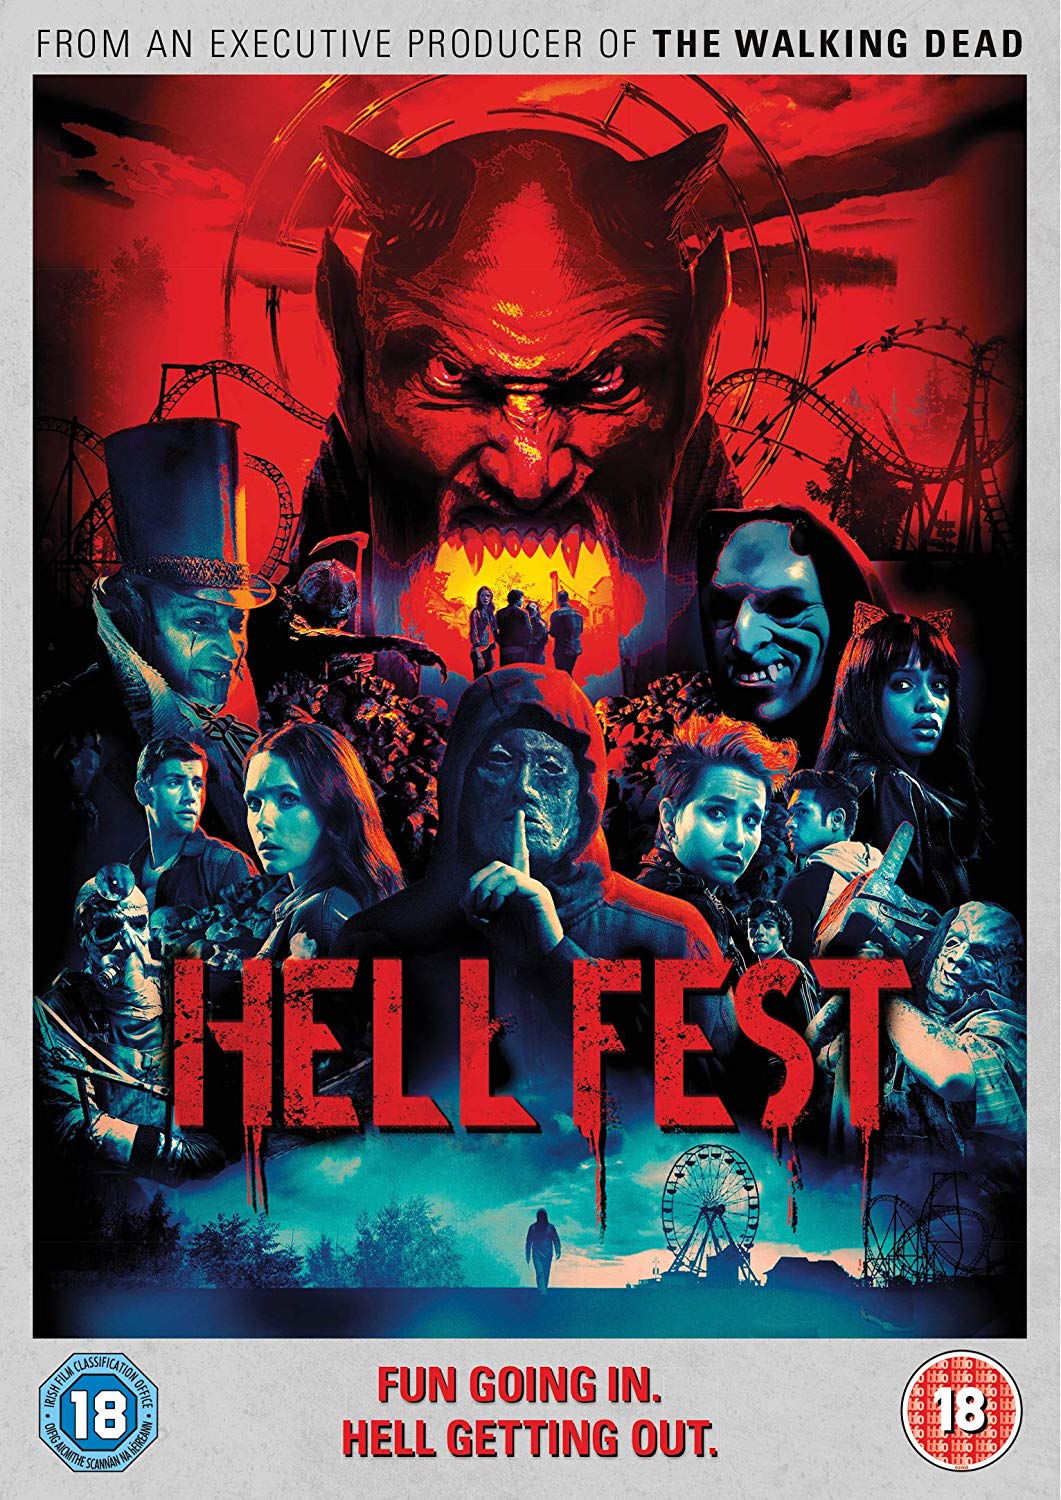 Hell Fest film review: serial killer stalks a horror theme park in throwback genre movie